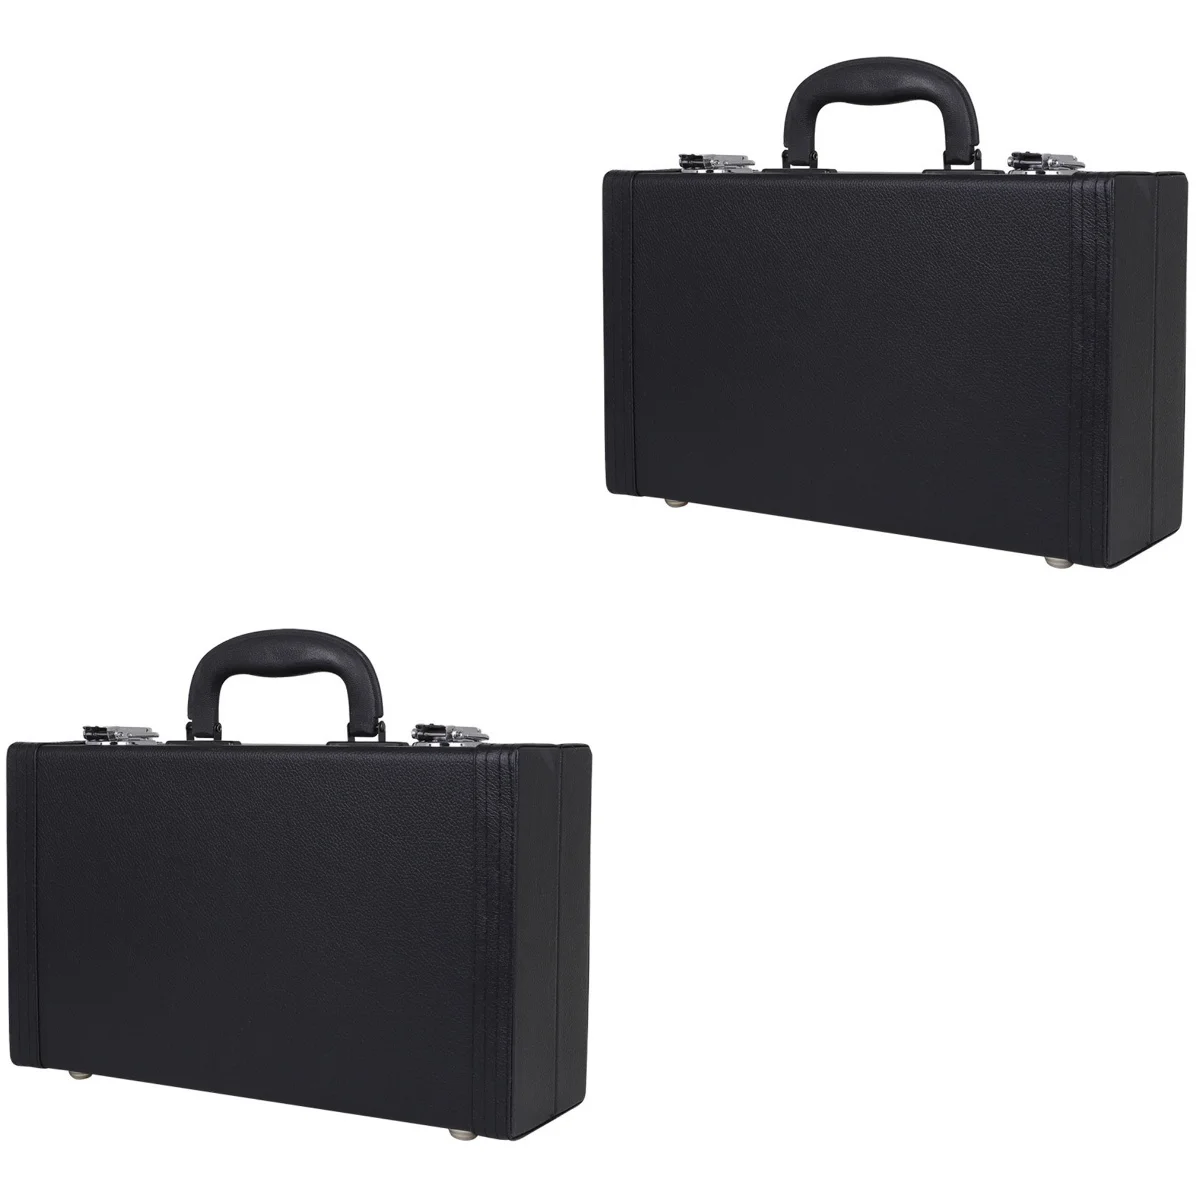 2x Clarinet Holder Bag Clarinet Case Clarinet PU Bag Padded Clarinet Case Clarinet Storage Bag Shockproof Clarinet Box enlarge